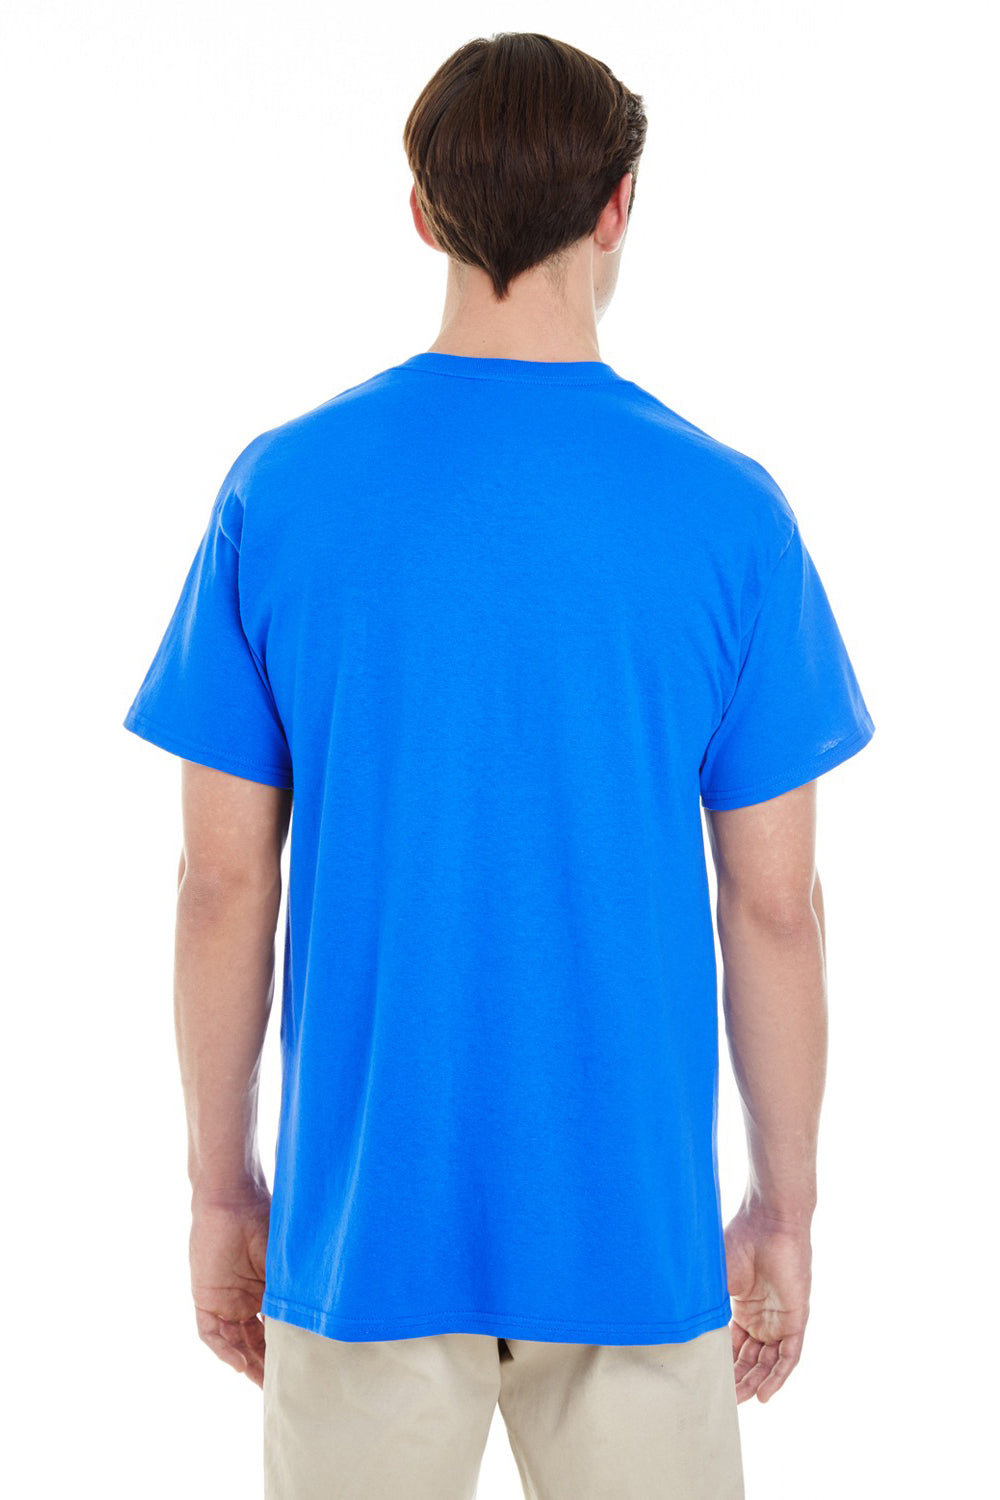 Gildan G530 Mens Short Sleeve Crewneck T-Shirt w/ Pocket Royal Blue Back